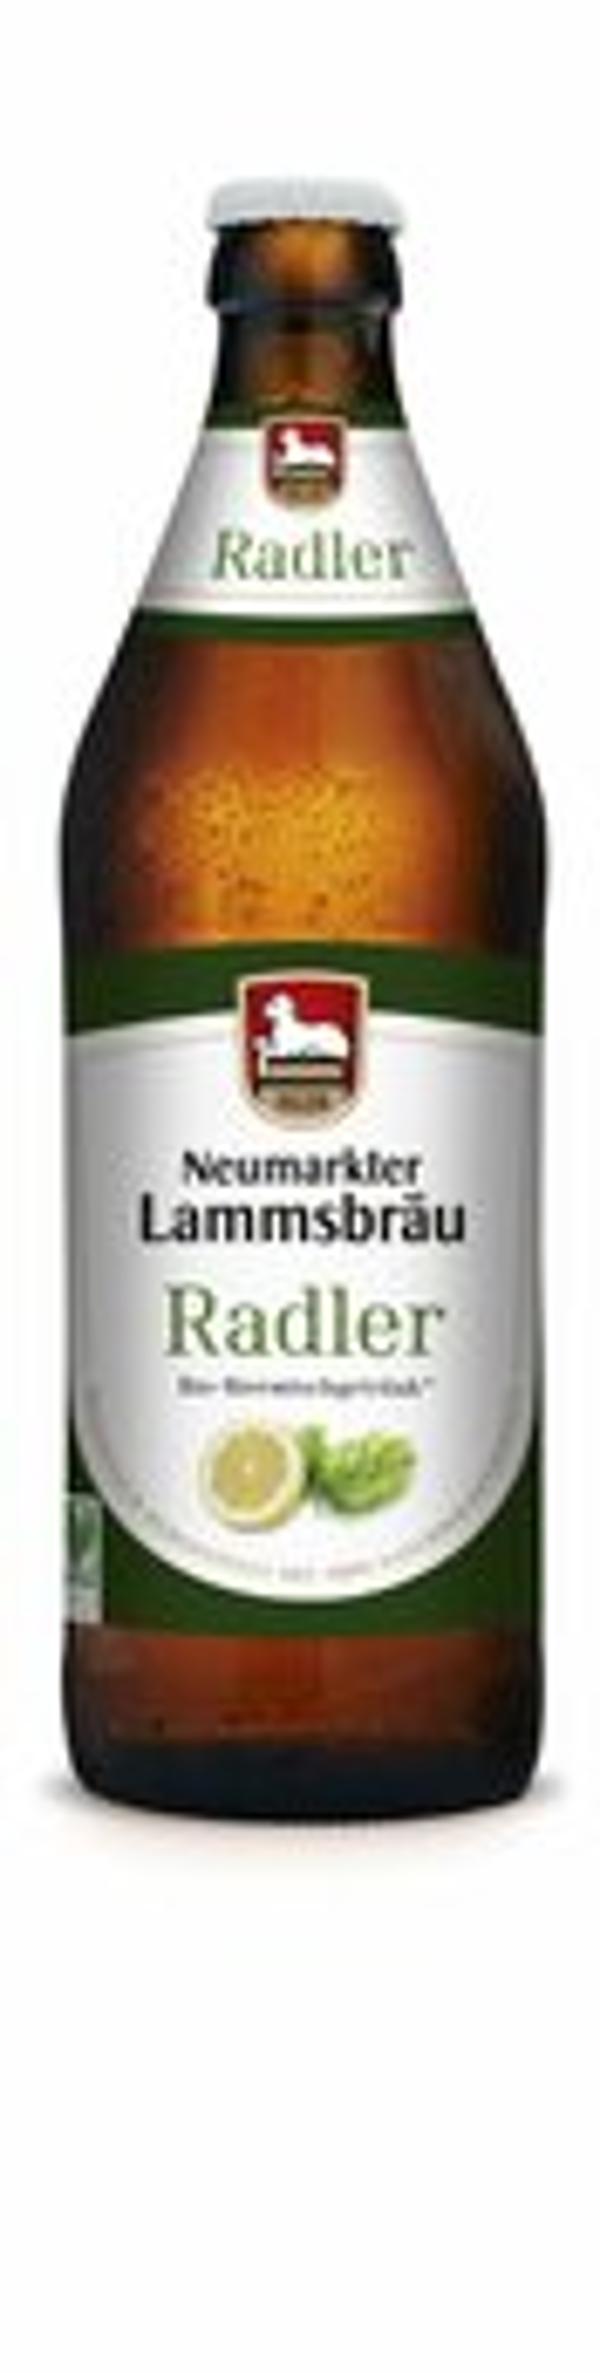 Produktfoto zu Lammsbräu Radler 0,5l